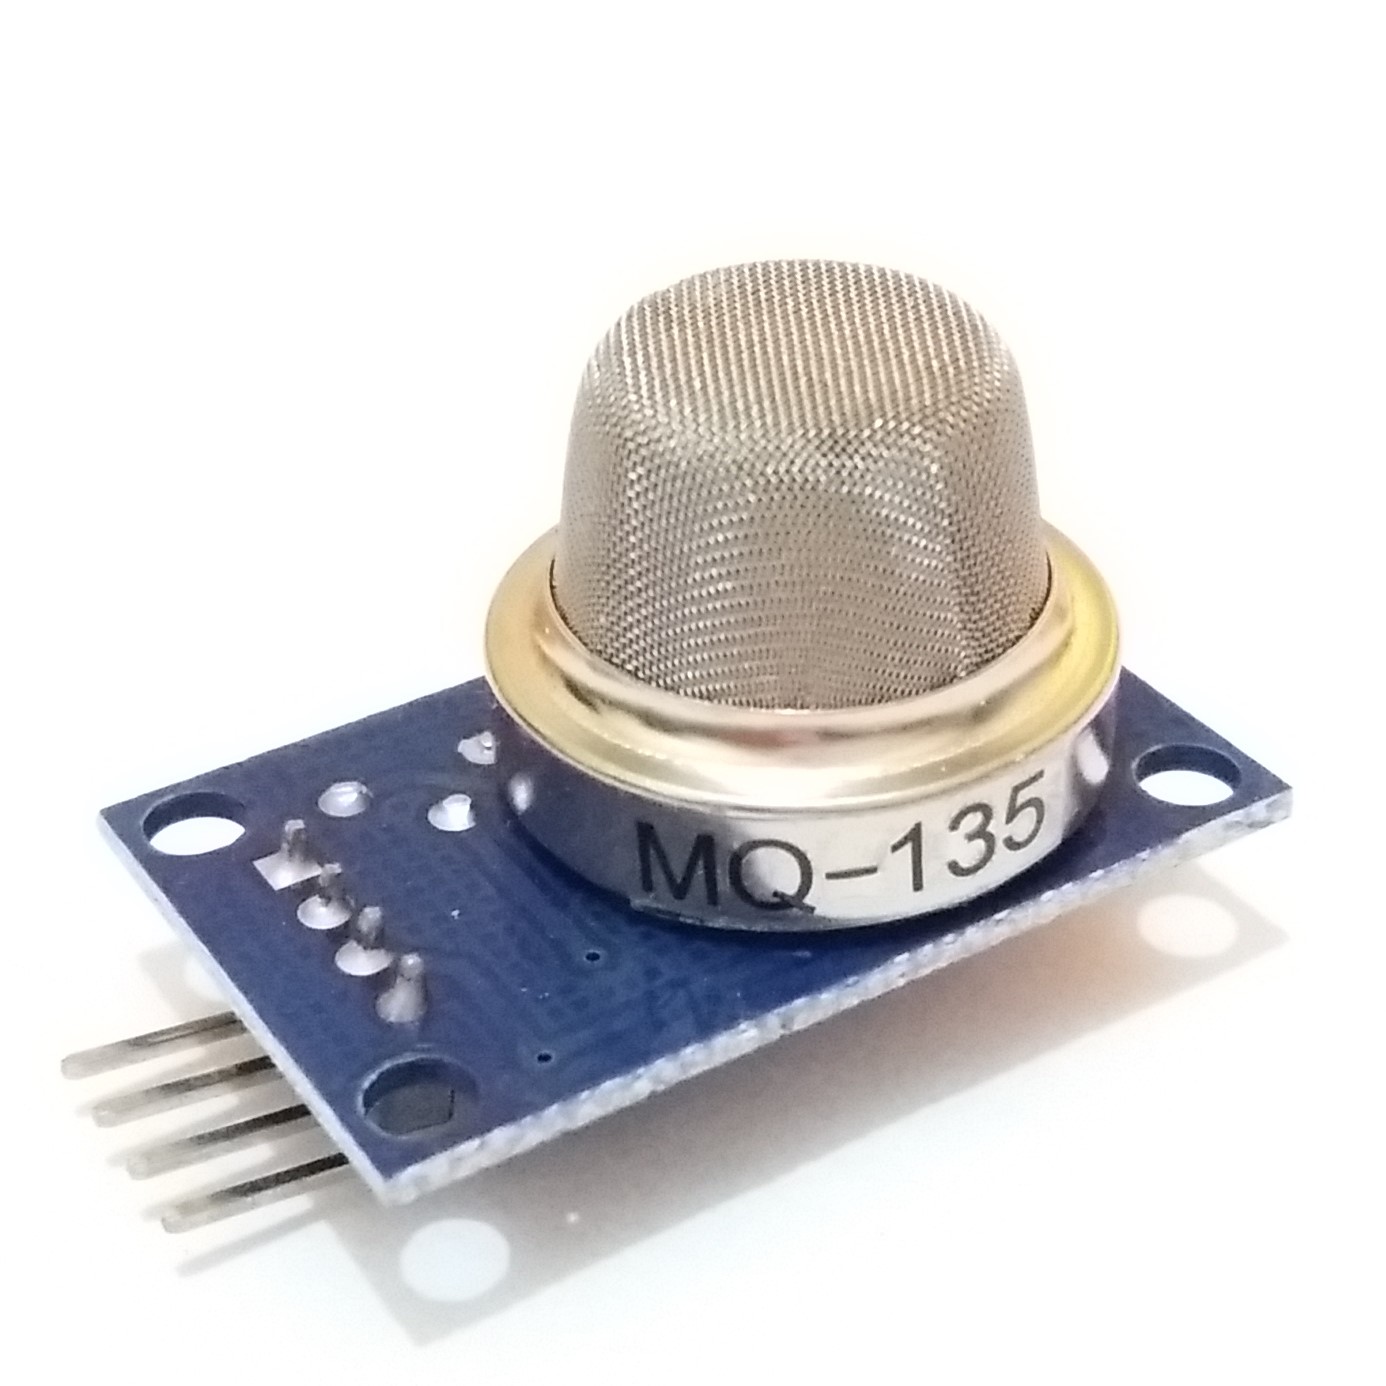 Mq135 Air Quality Sensor Module Kirig Ph Hobby Electronics Shop